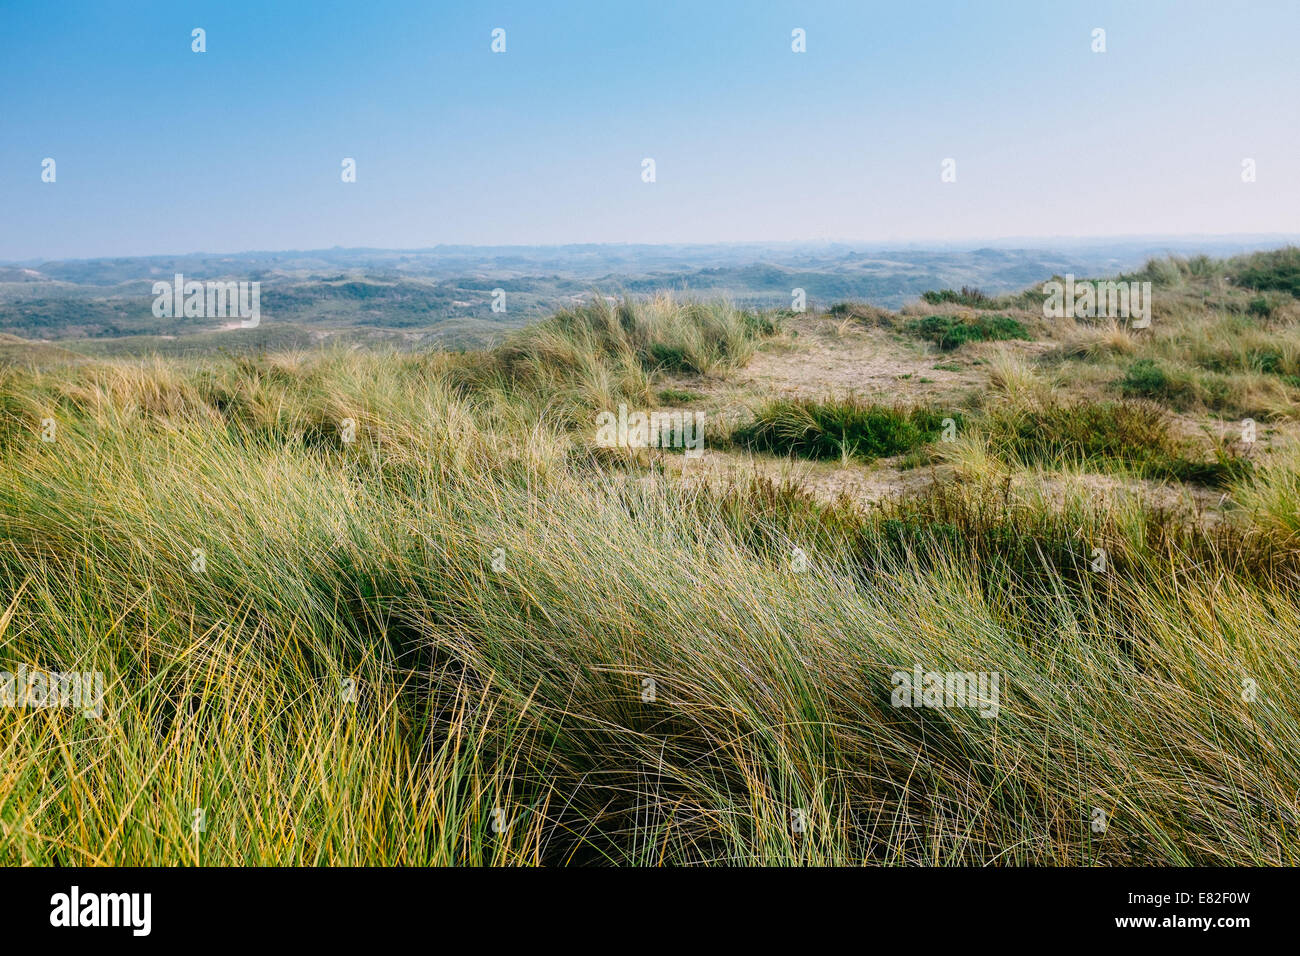 Dunes in the Nationaal Park Zuid-Kennemerland Zandvoort, The Netherlands Stock Photo